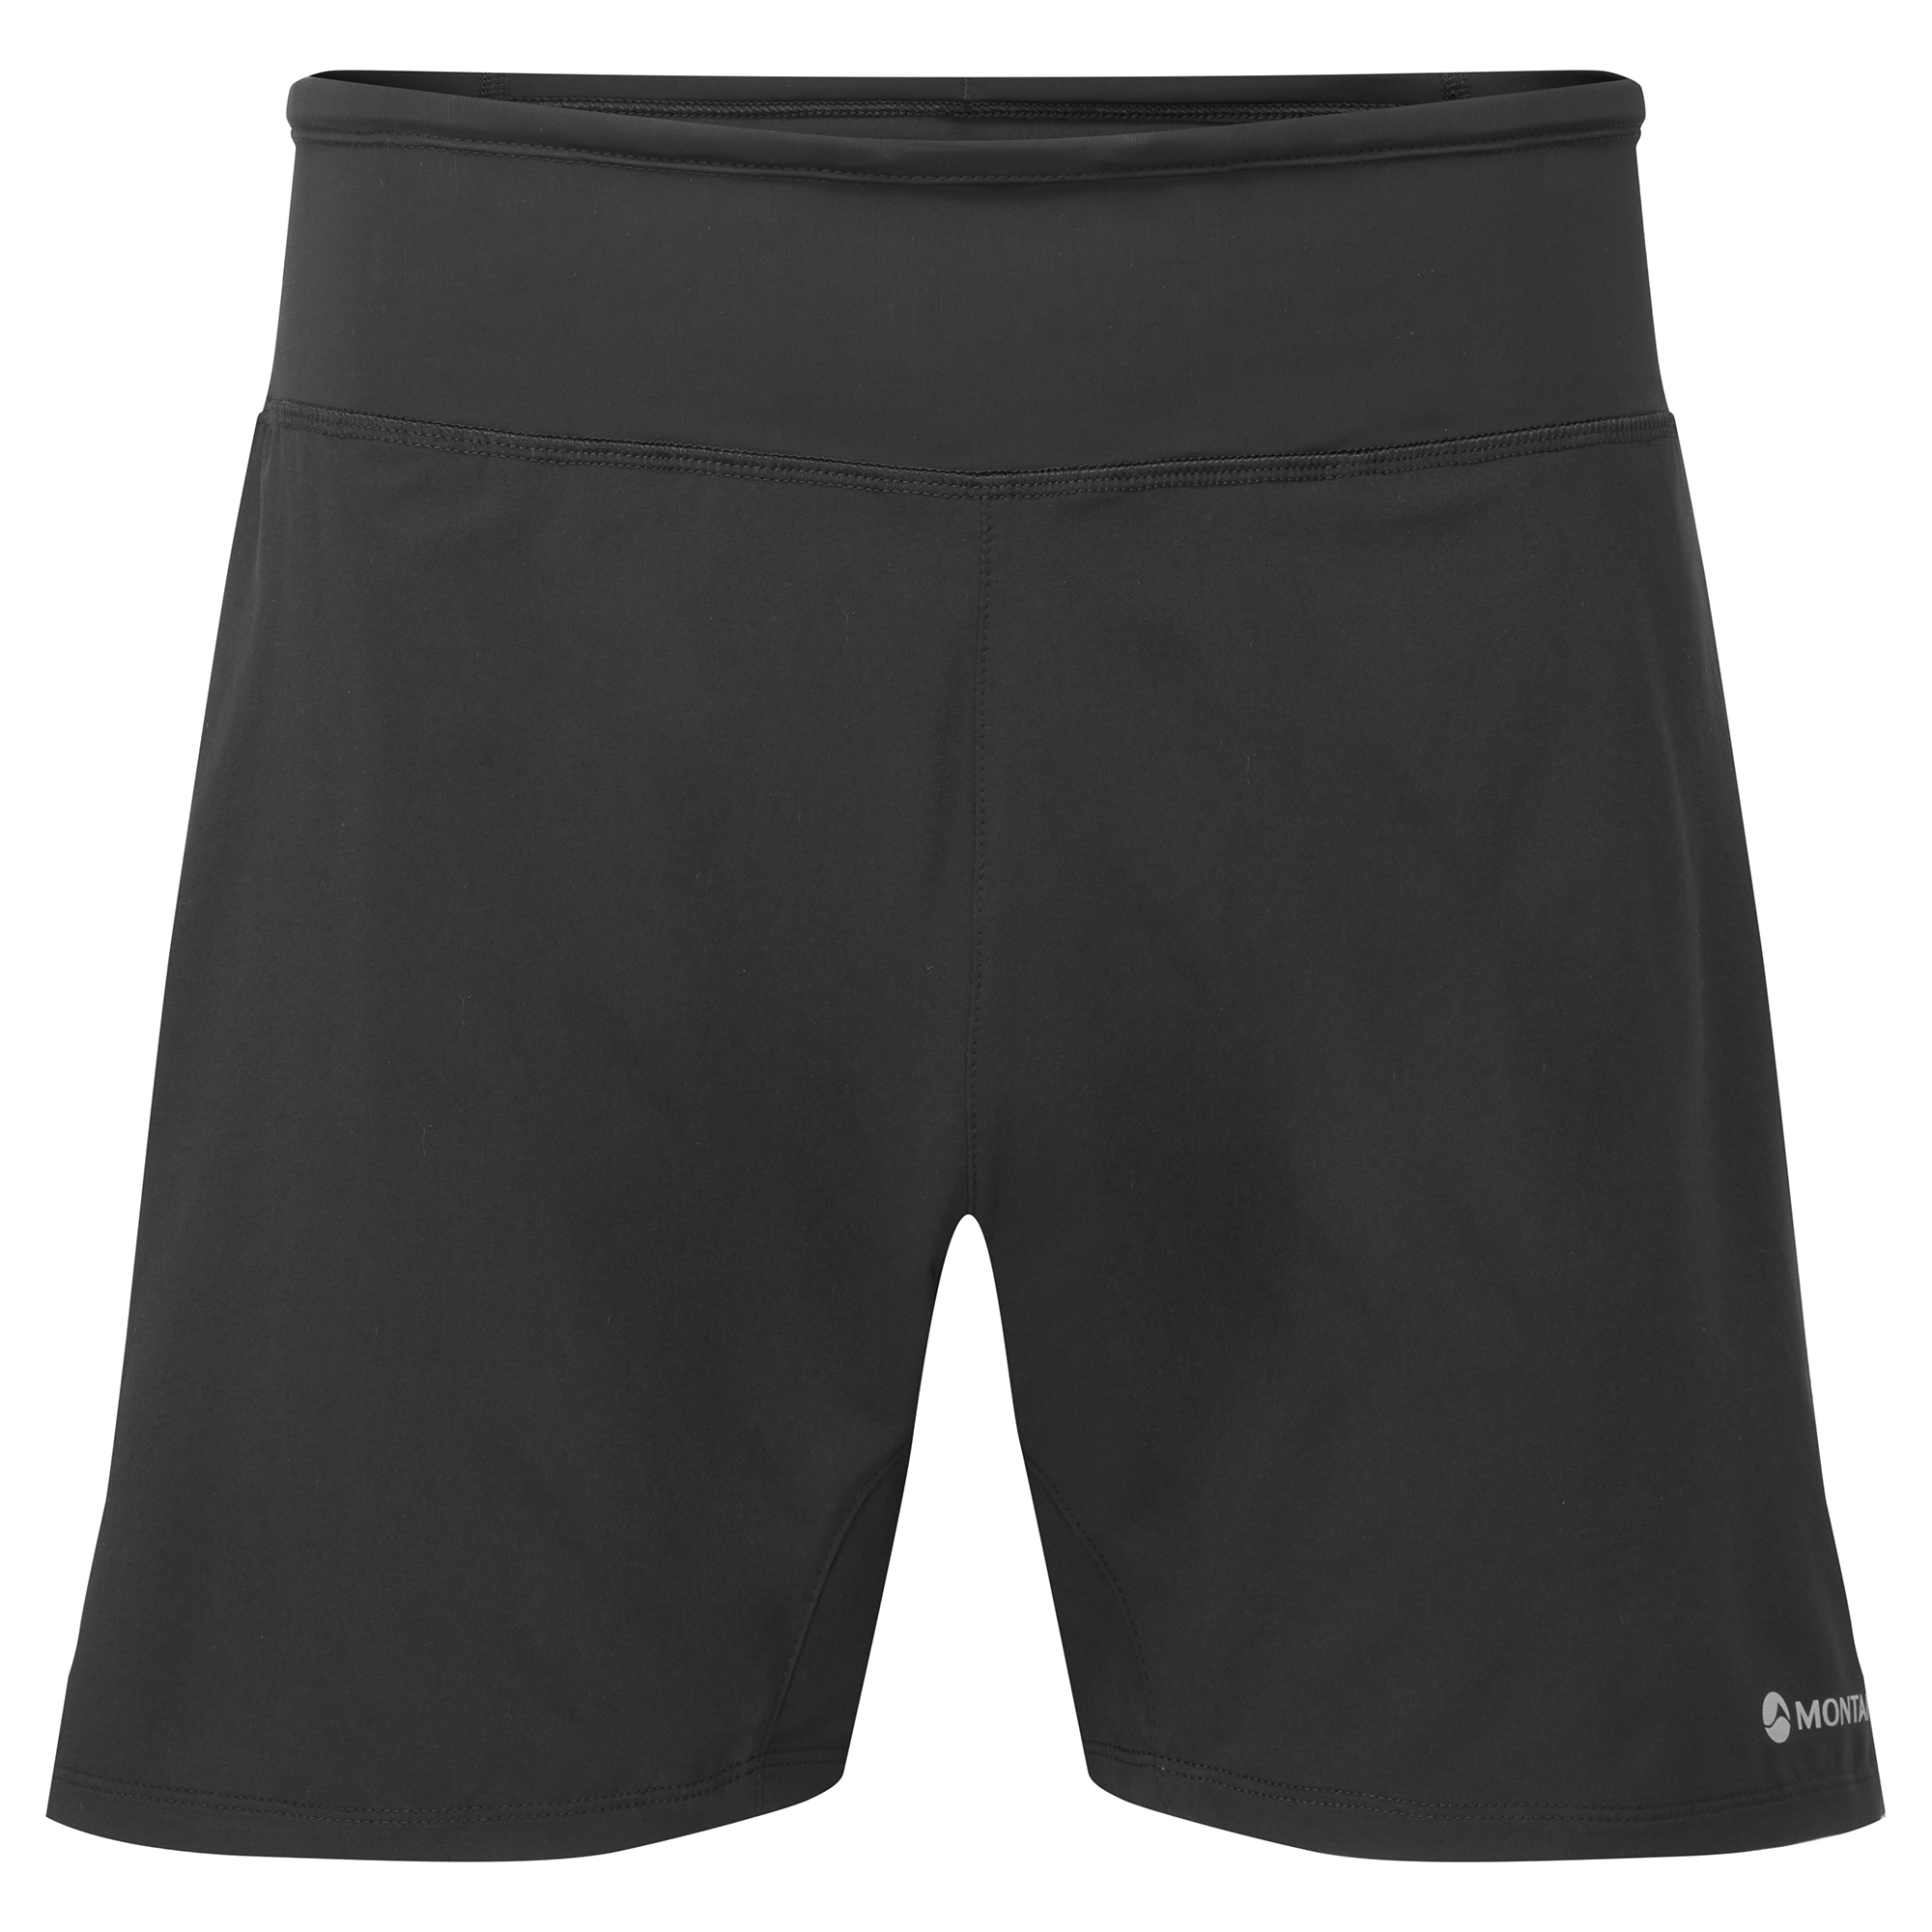 Montane pánské kraťasy Slipstream 5" Shorts Barva: black, Velikost: L